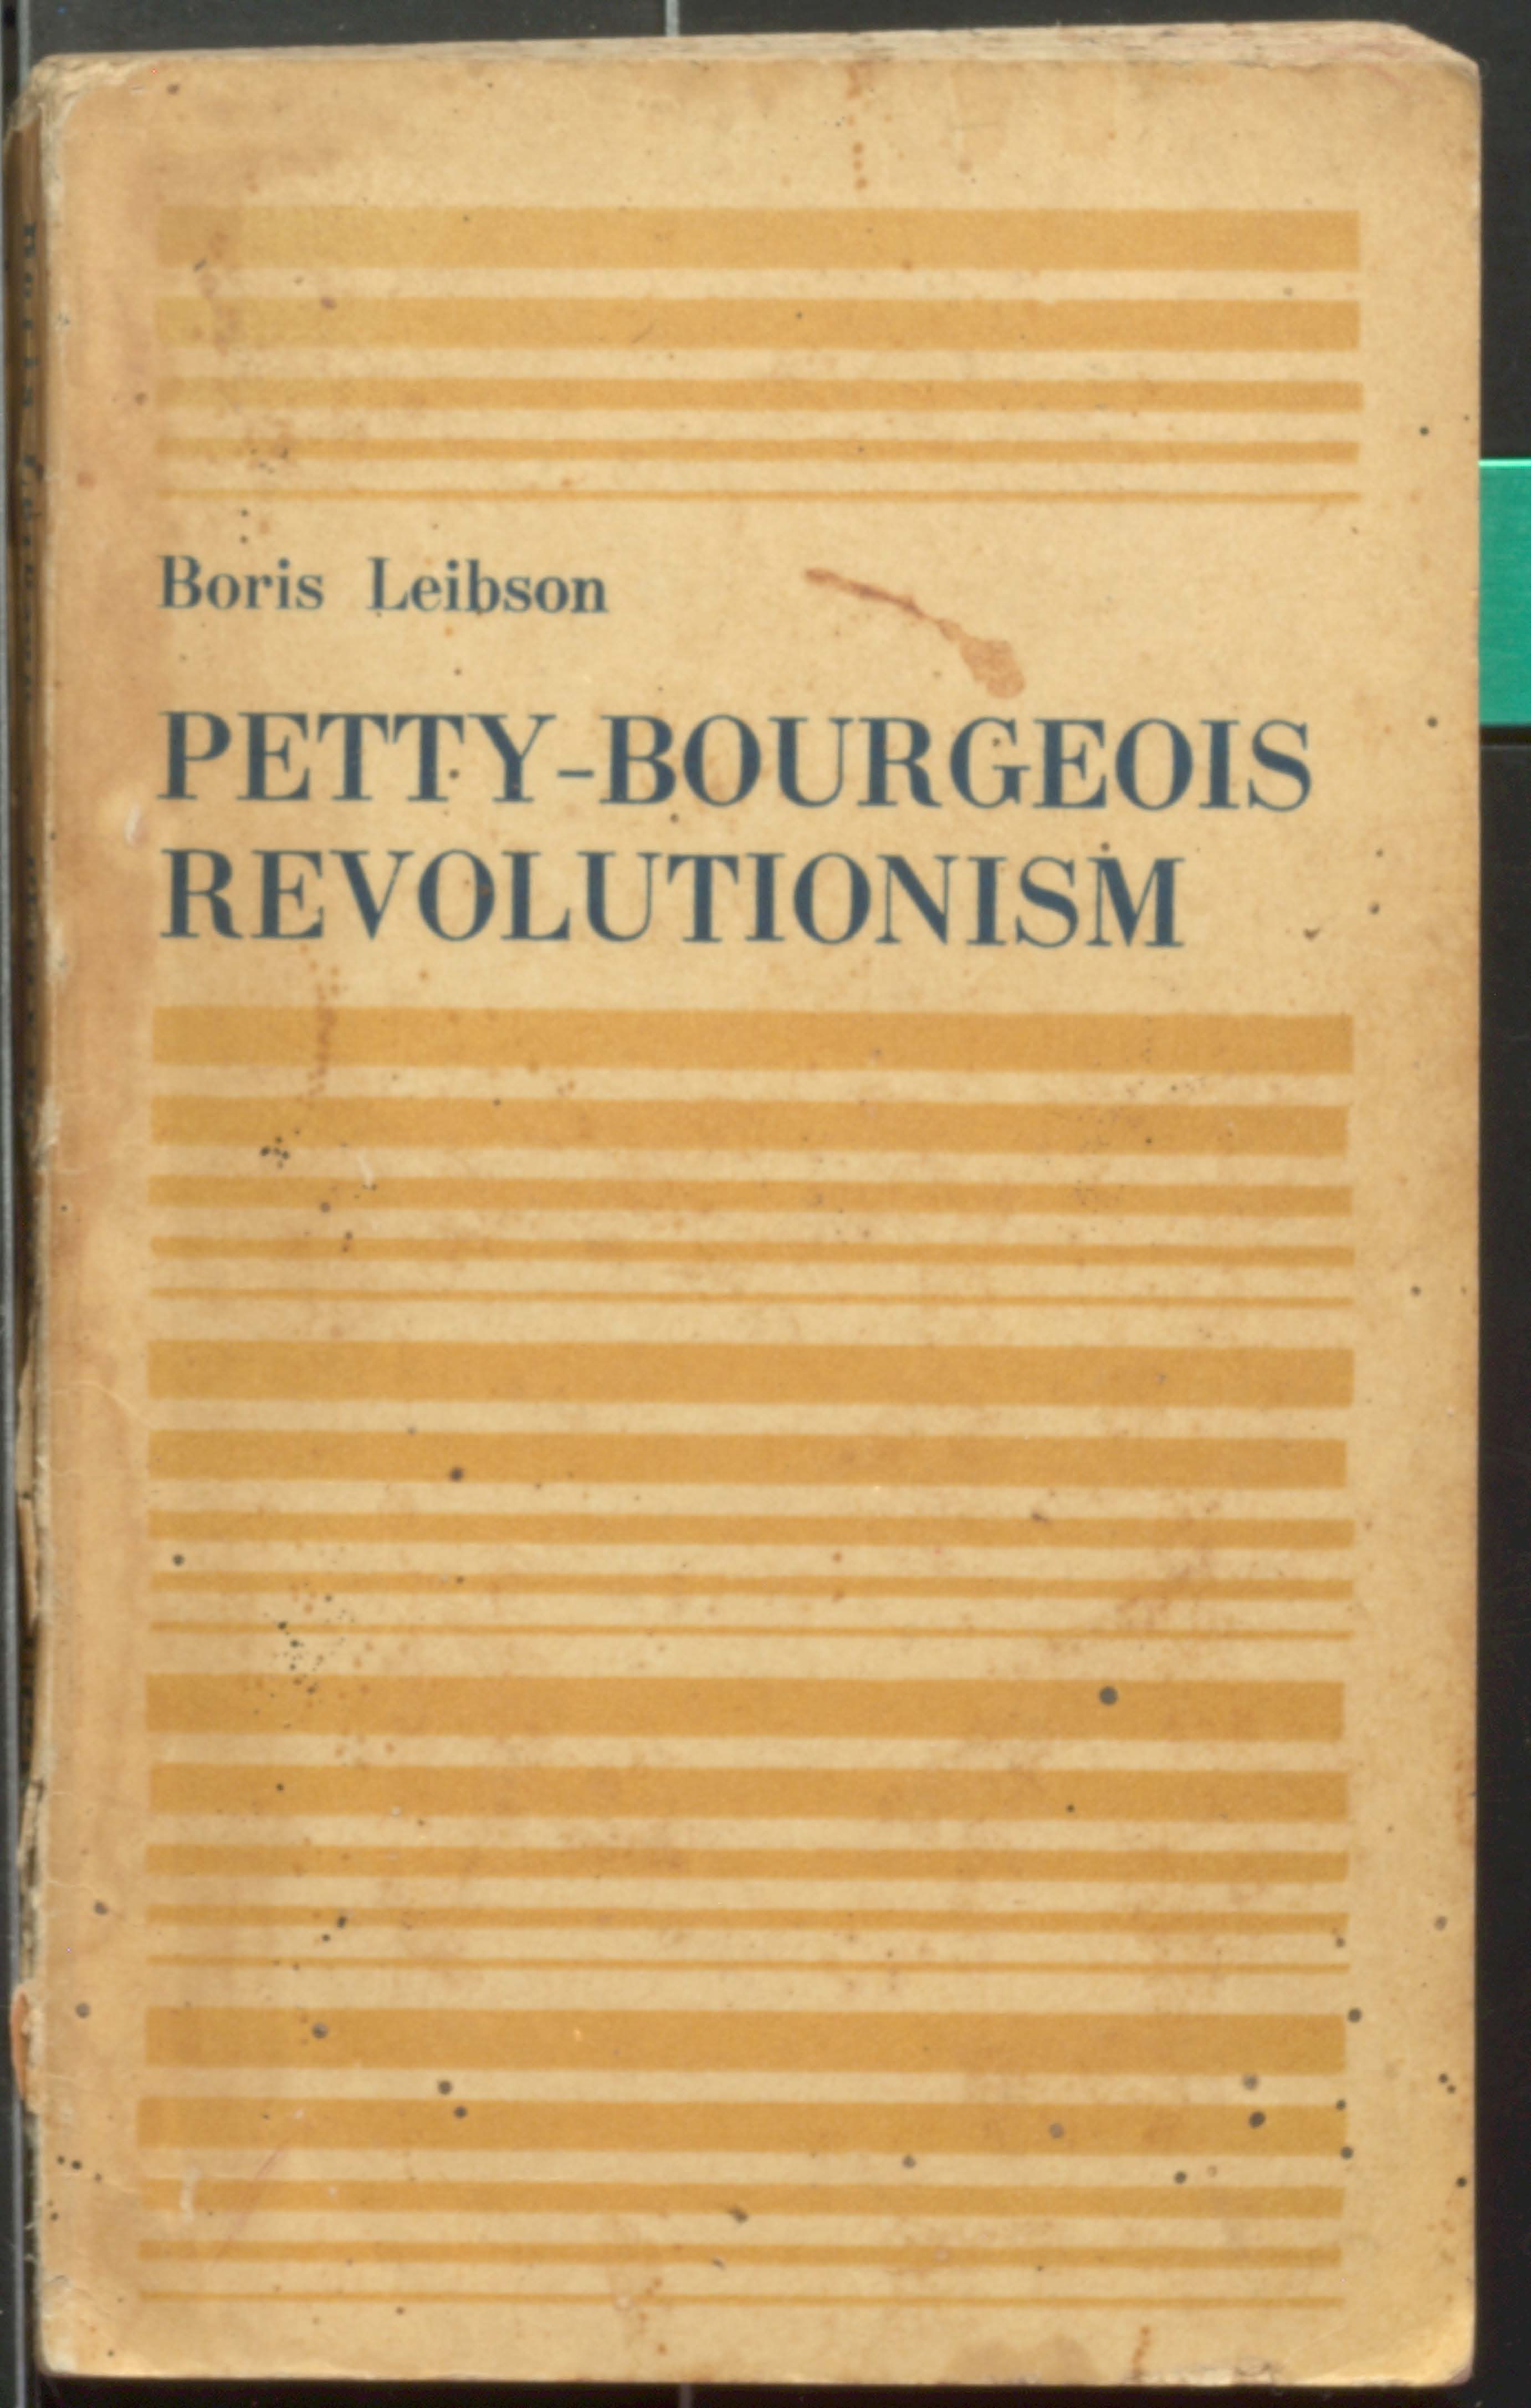 Petty-bourgeols revolutionism